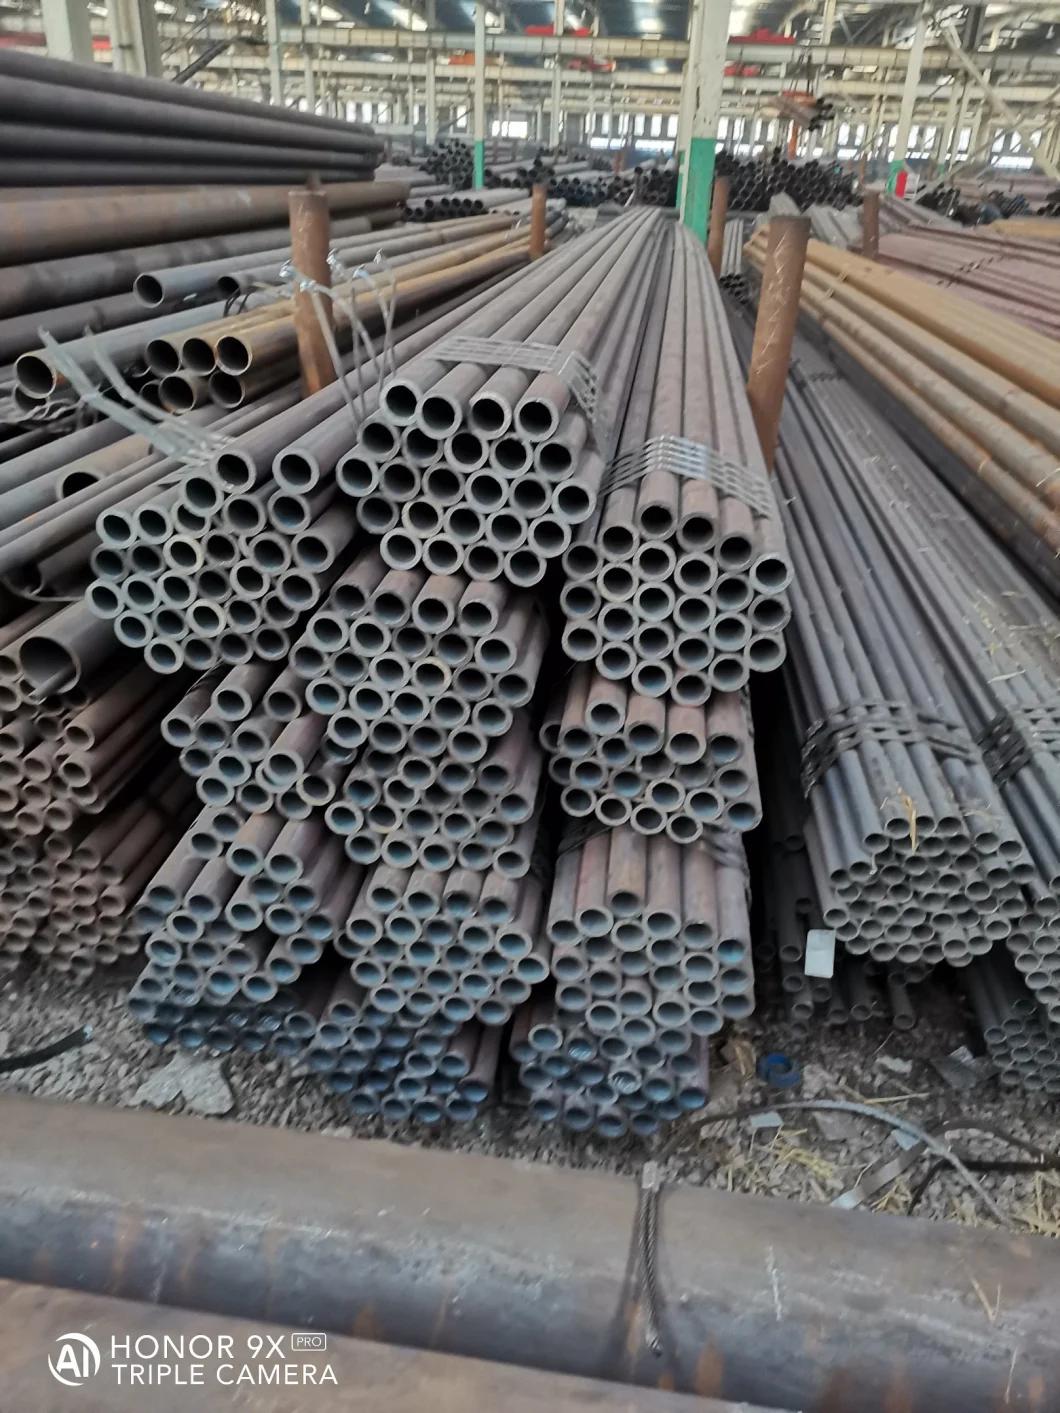 ASME SA106 Grade B Seamless Carbon Steel Pipe